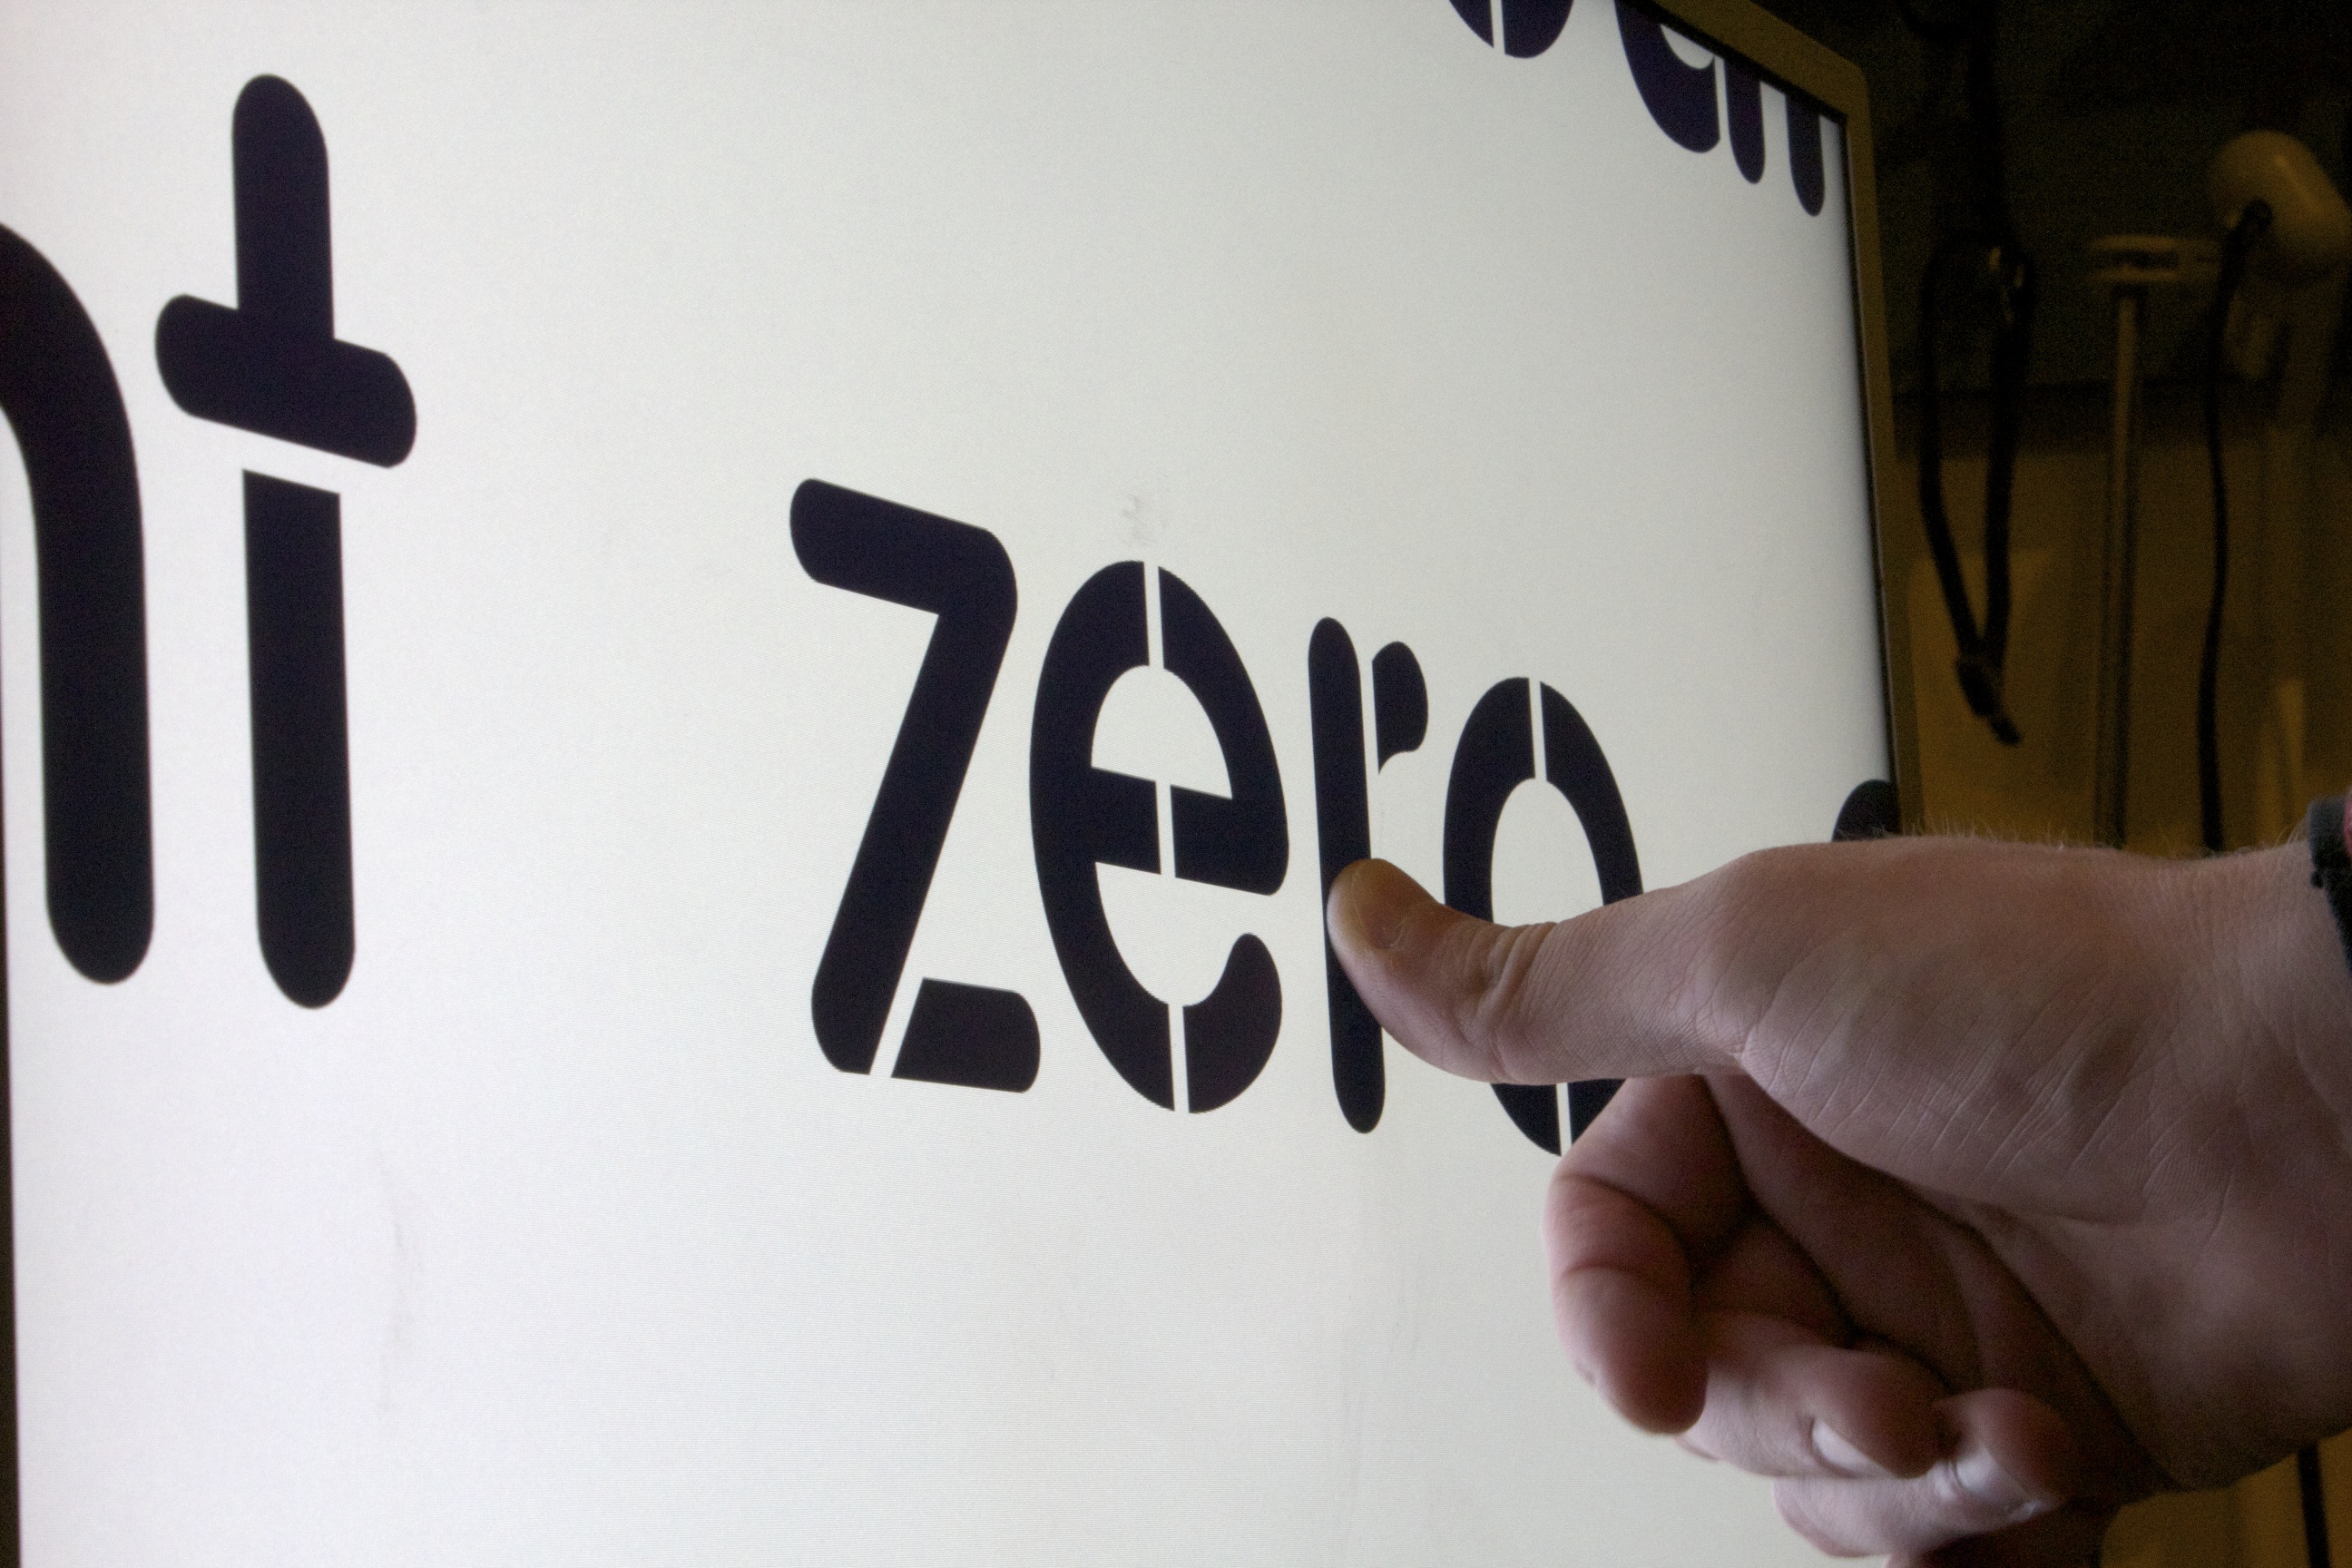 Word Wall - Testing Word Size - Pressing Zero